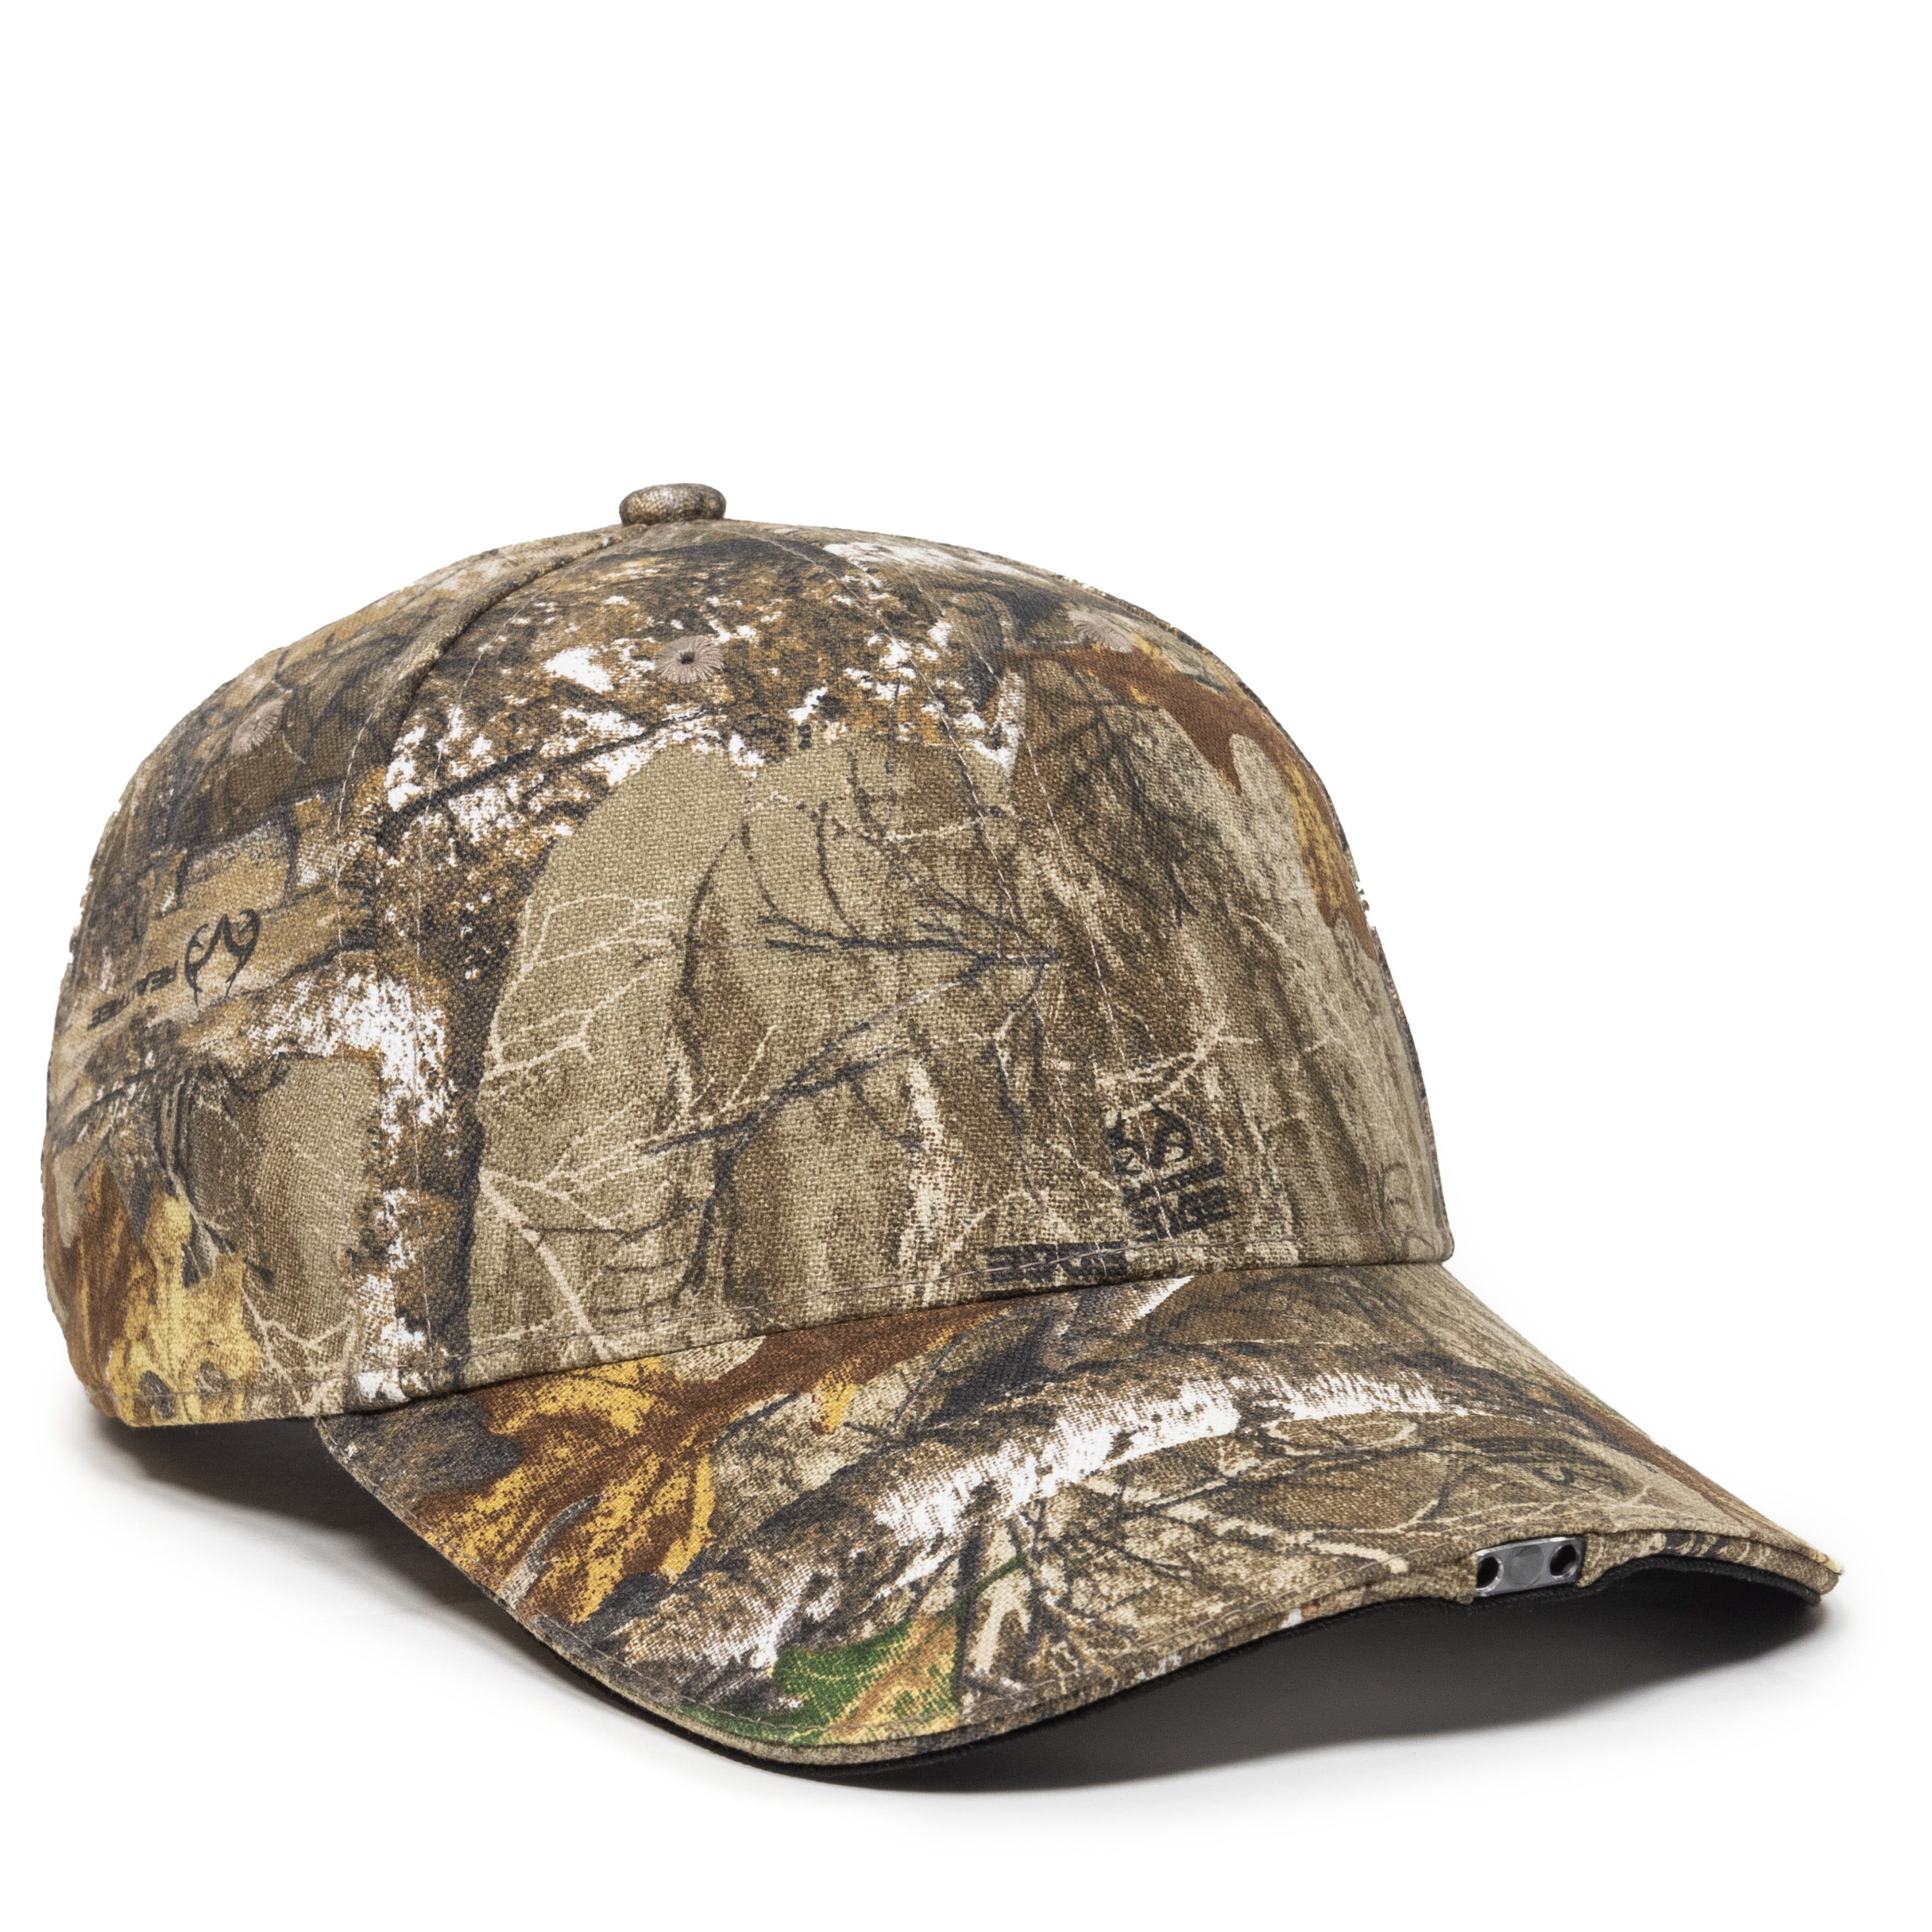 Men's REALTREE XTRA Camo Hat Adjustable Hunting Baseball Cap NEW 